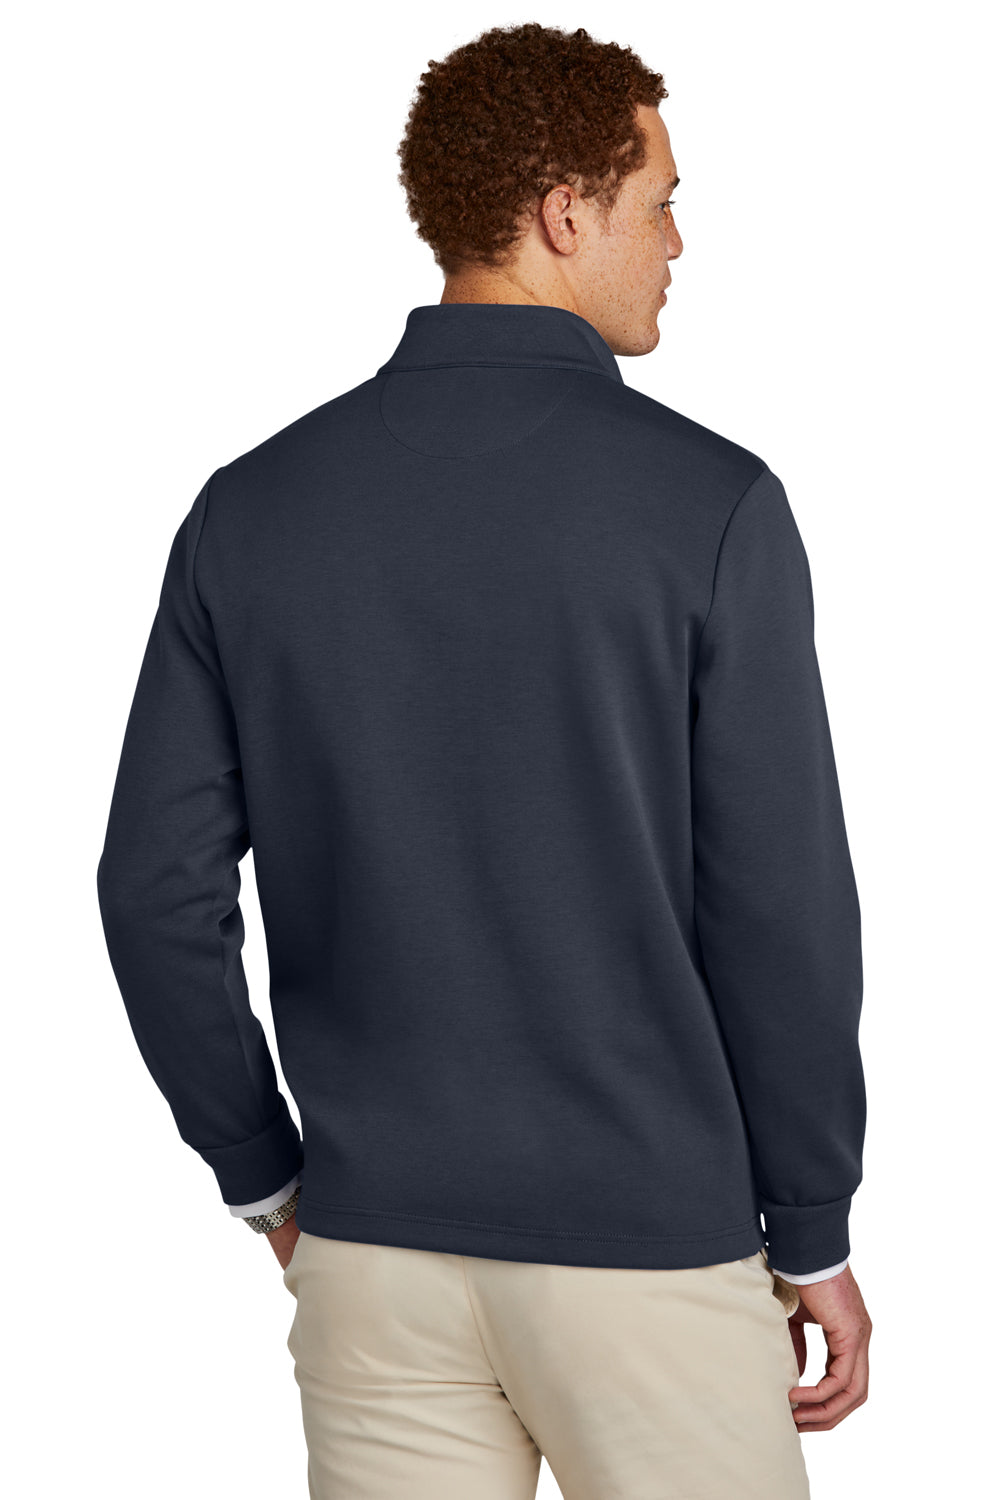 Brooks Brothers Mens Double Knit 1/4 Zip Sweatshirt Night Navy Blue Model Back